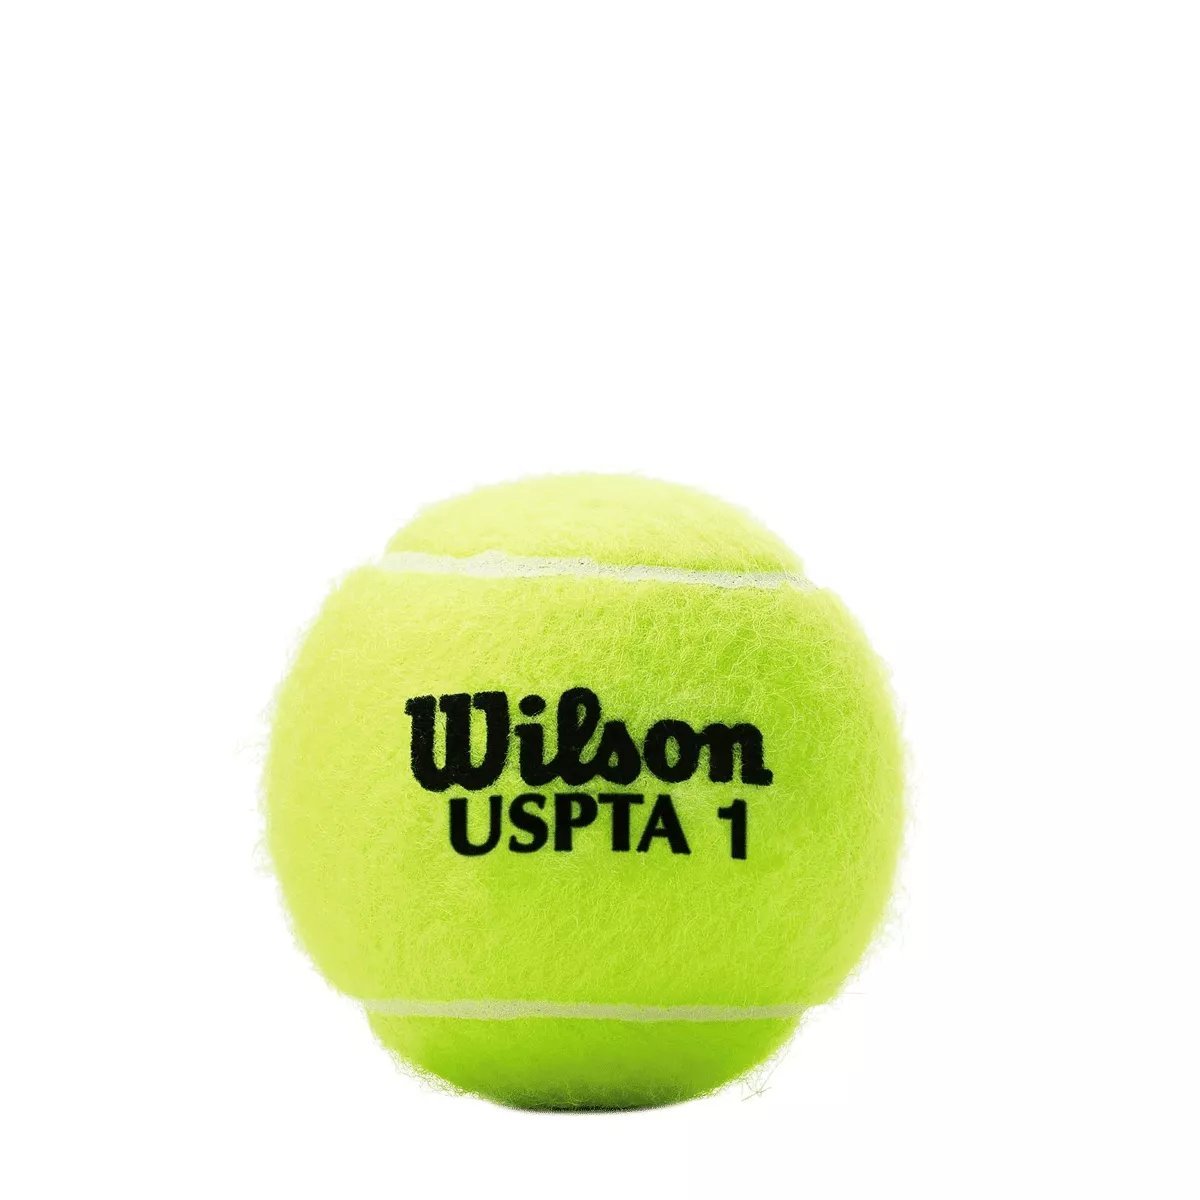 Kit Pelotas Tenis X3 Und Deporte Juego Tennis Raquetas